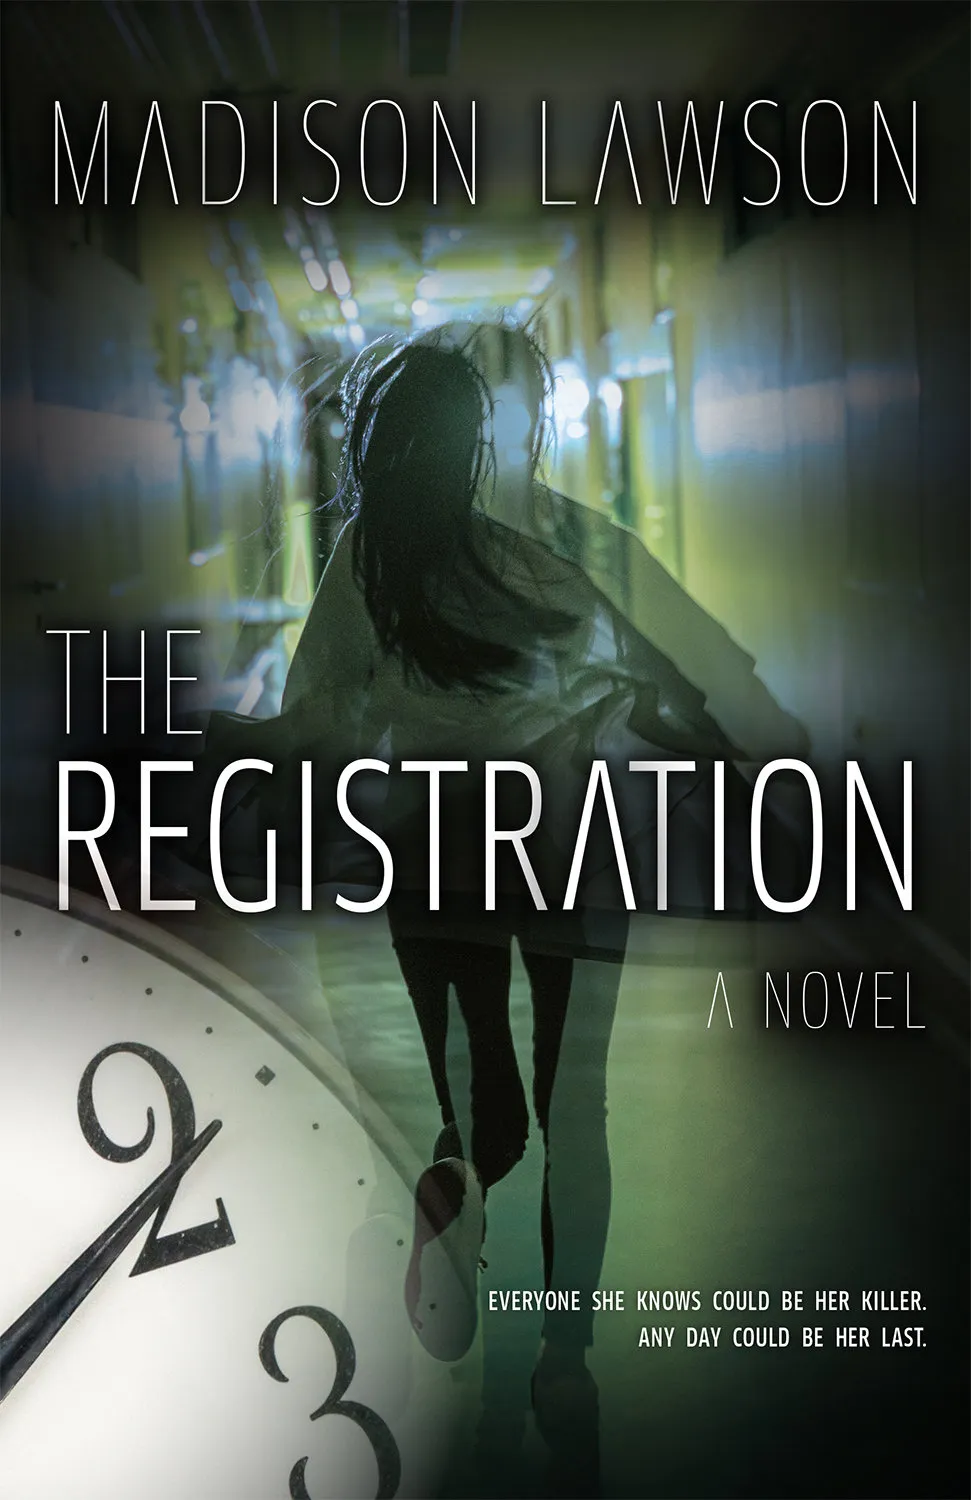 Sydney Sweeney to star in sci-fi thriller 'The Registration' based on Madison Lawson's novel | FMV6